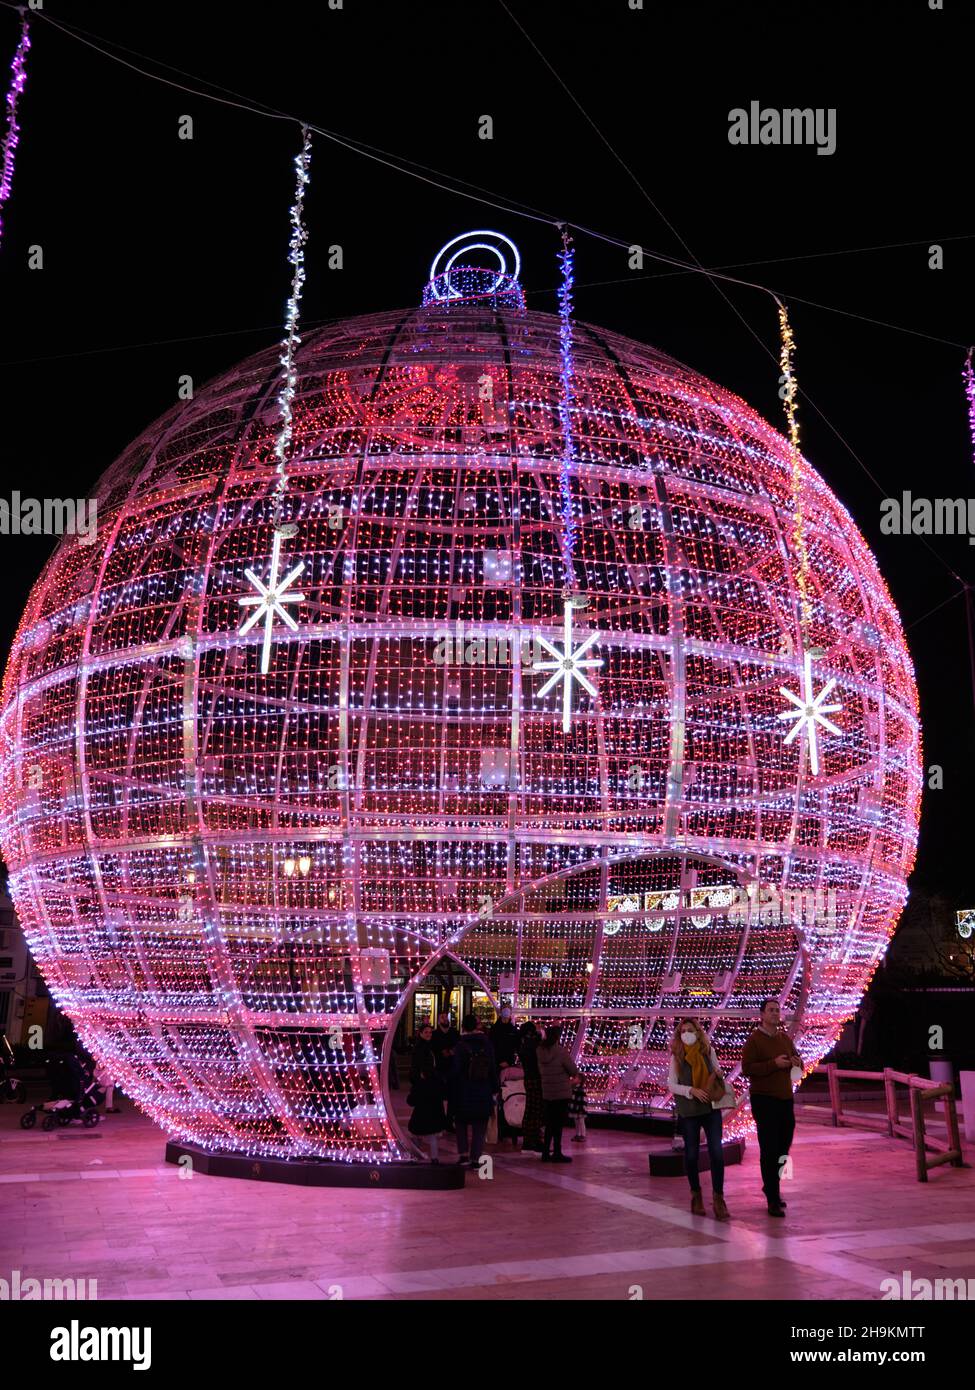 Hessa Christmas ball with picture bola navidad con tu foto